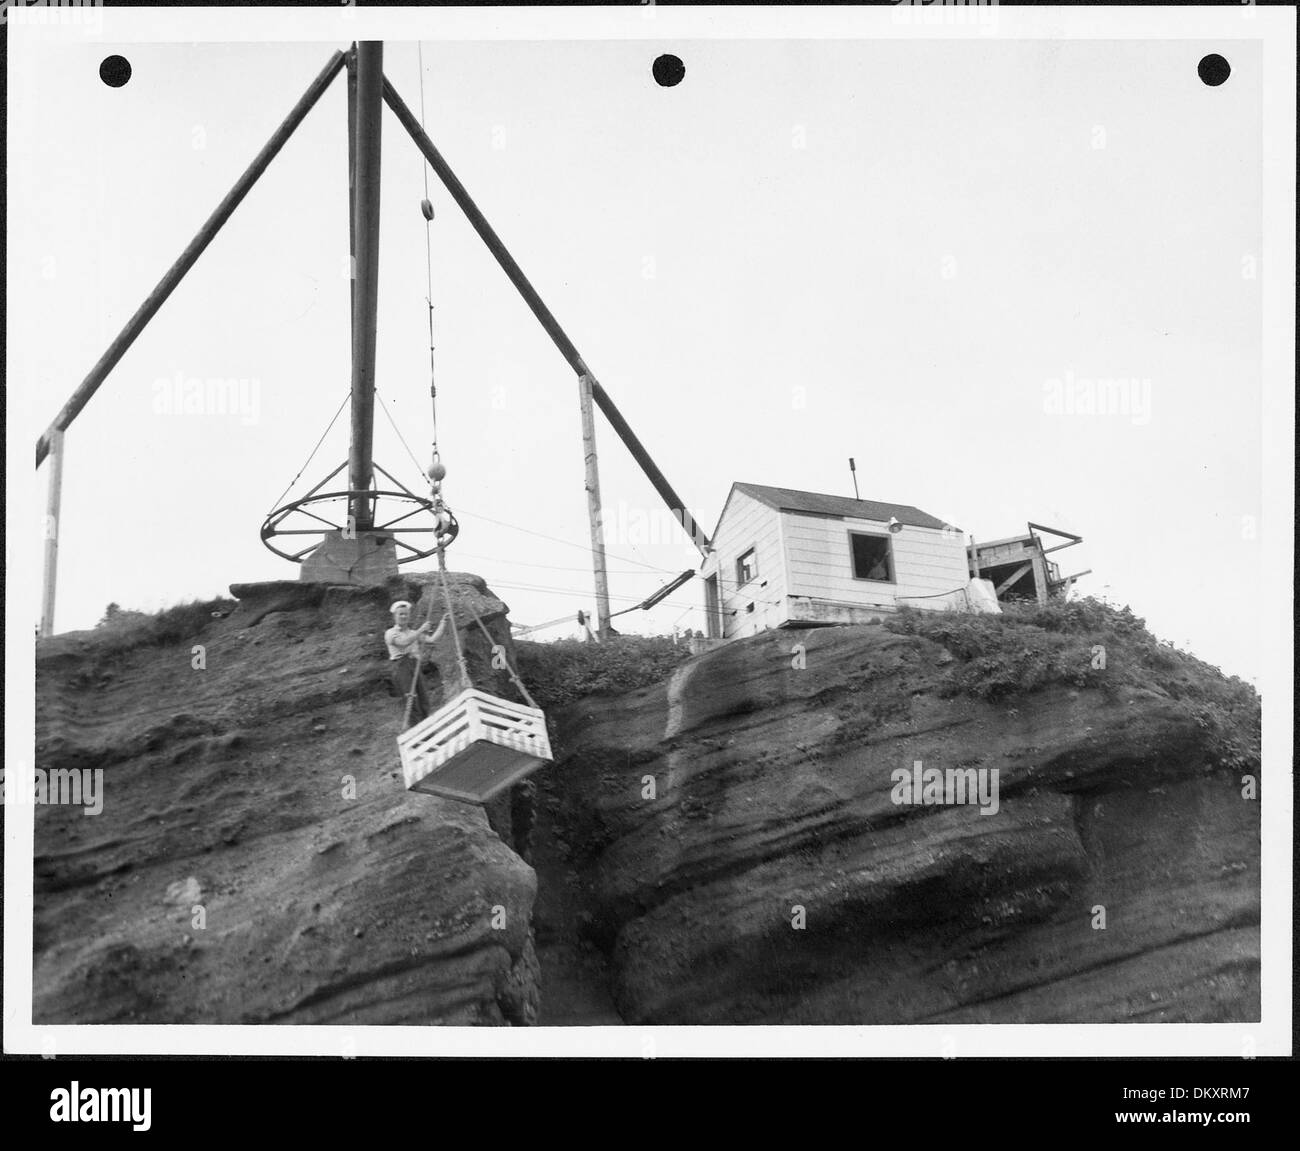 'The Basket', Cape Flattery Lightstation, ca. 1943 - ca. 1953 298188 Stock Photo